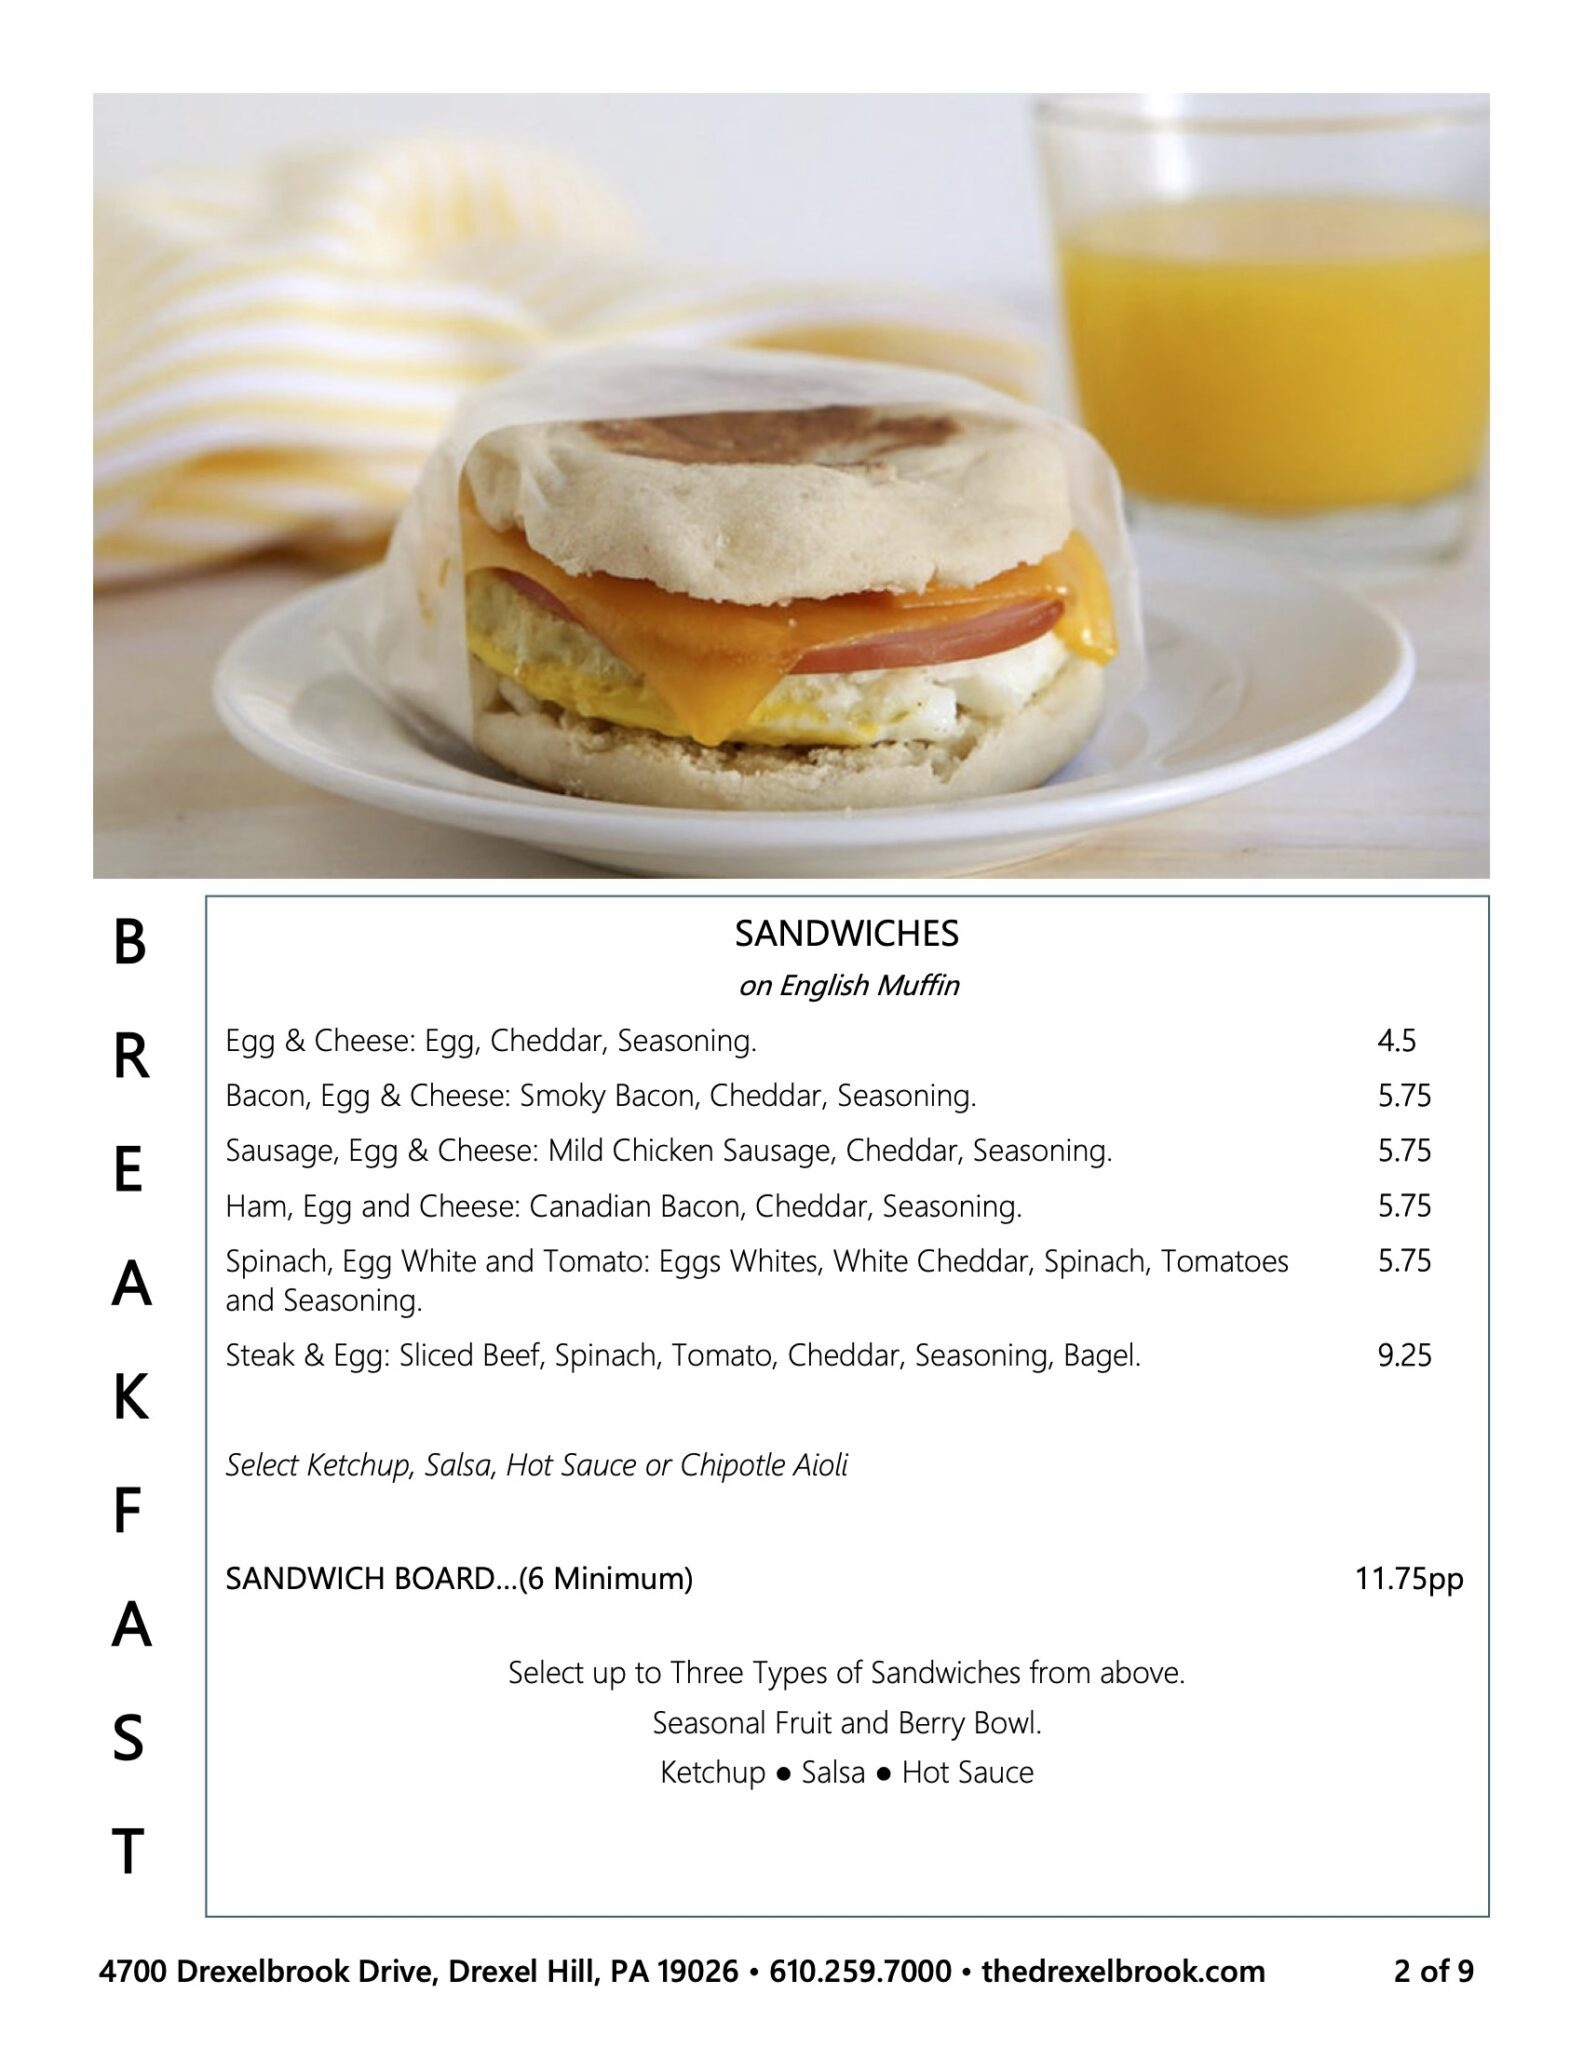 Drexelbrook breakfast sandwiches on english muffin options